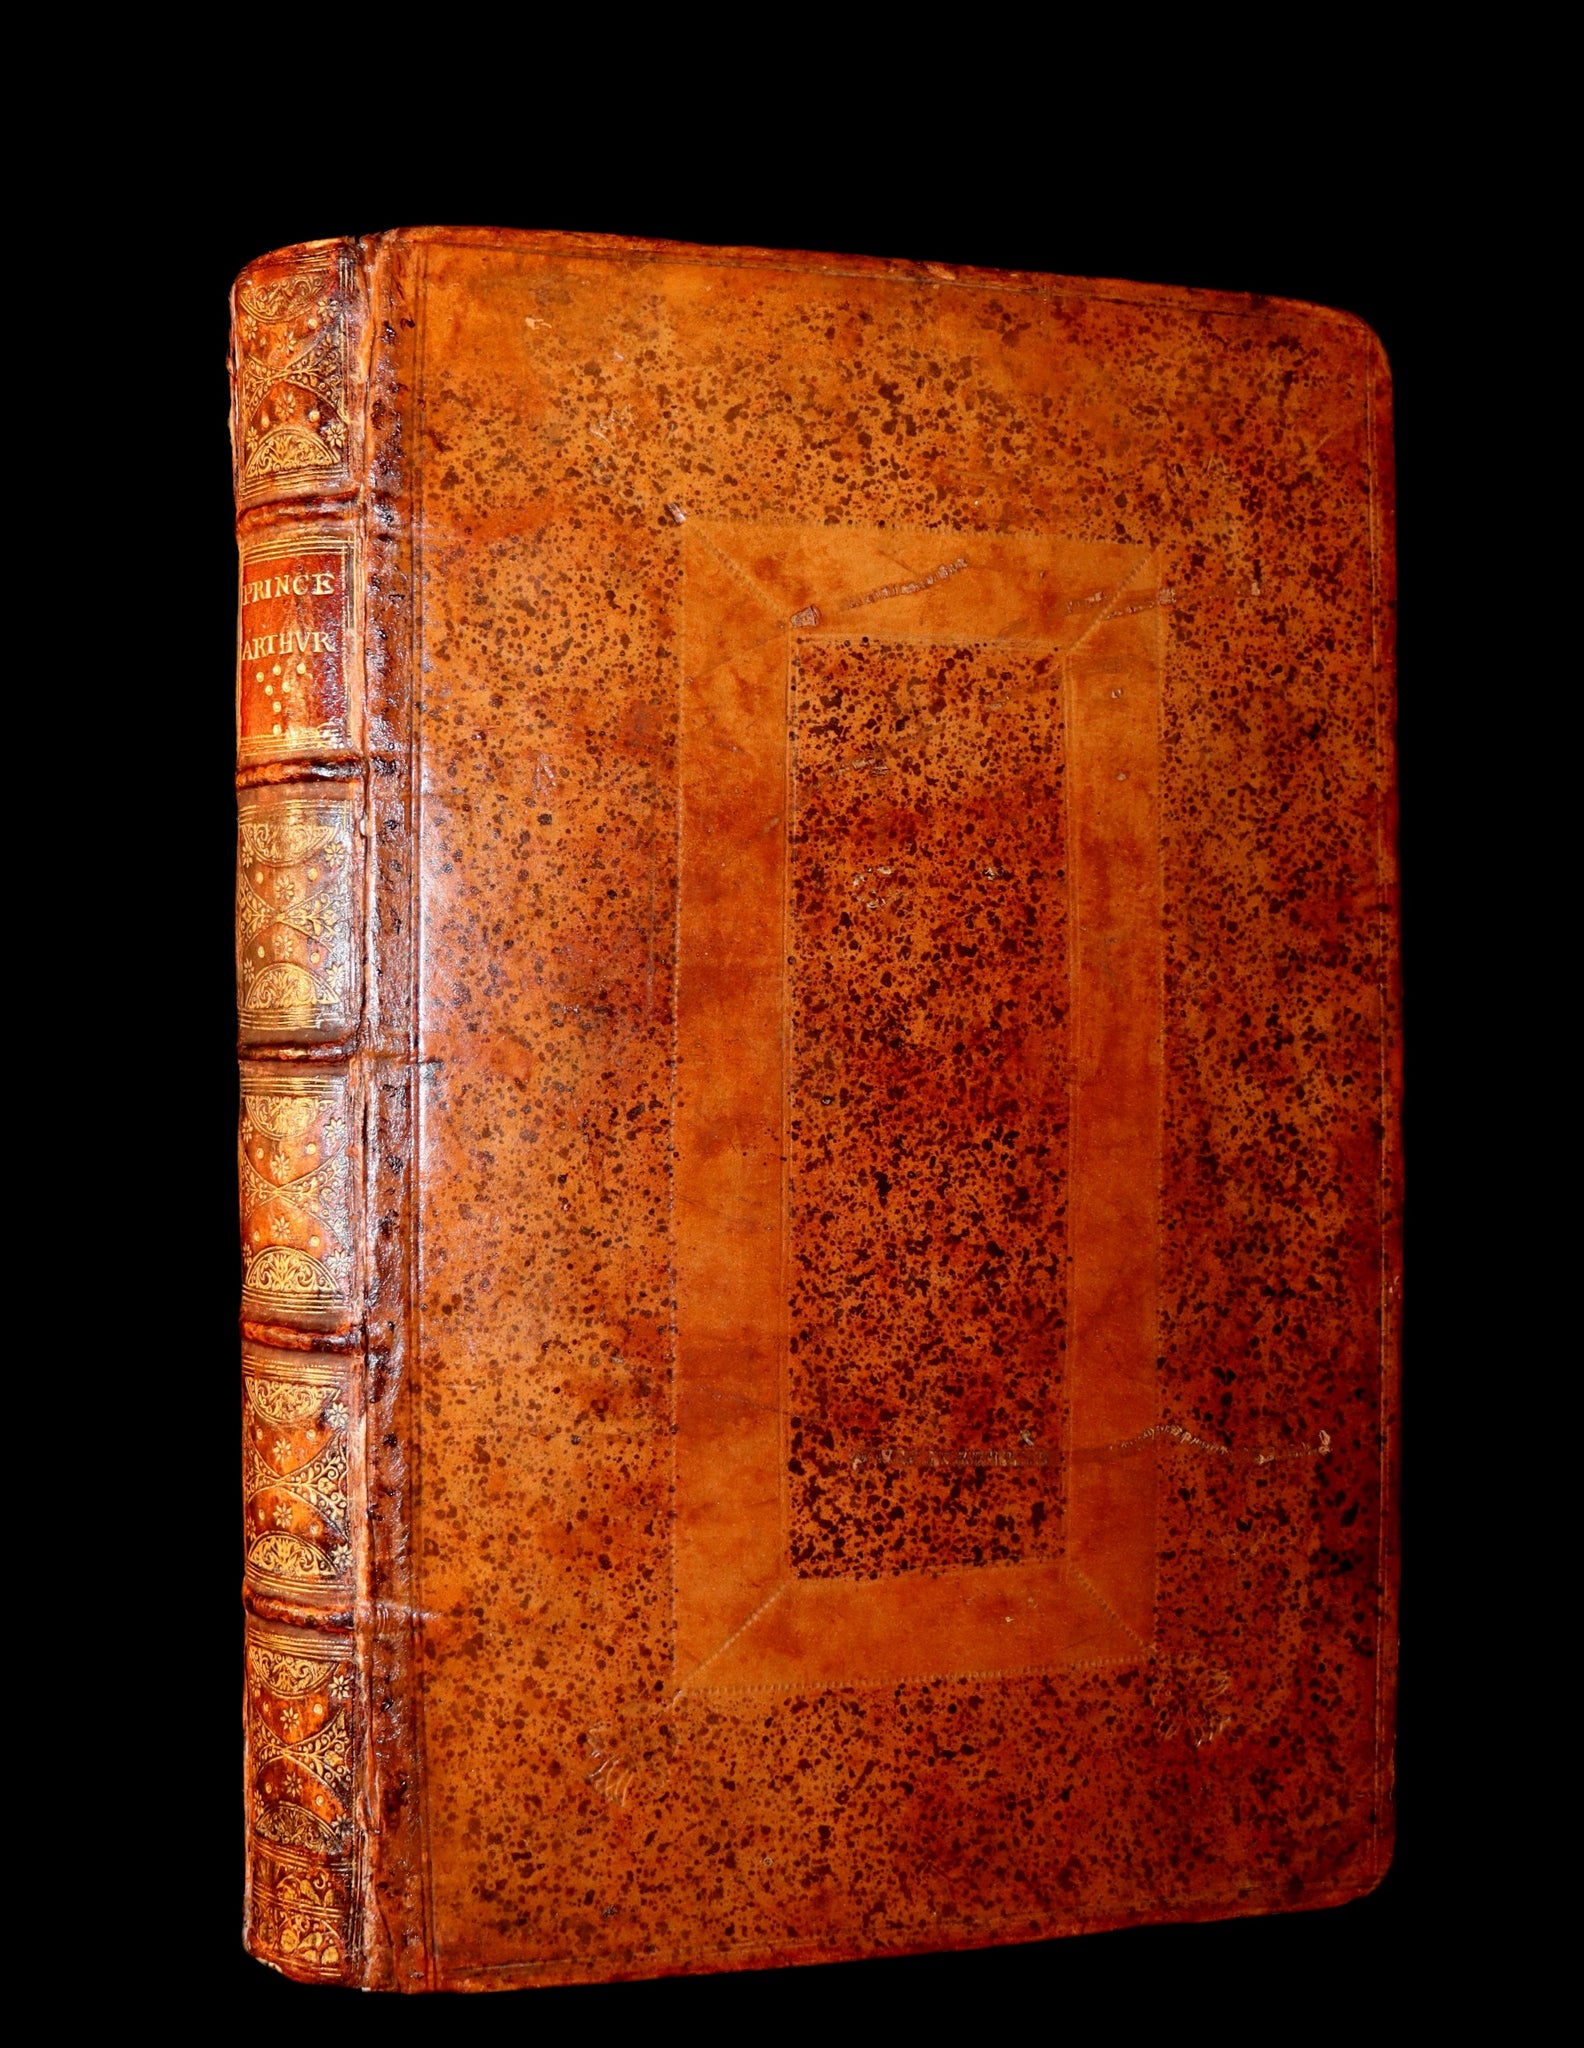 1695 Rare Book ~ KING ARTHUR - Prince ARTHUR An Heroick Poem by Sir Richard Blackmore.